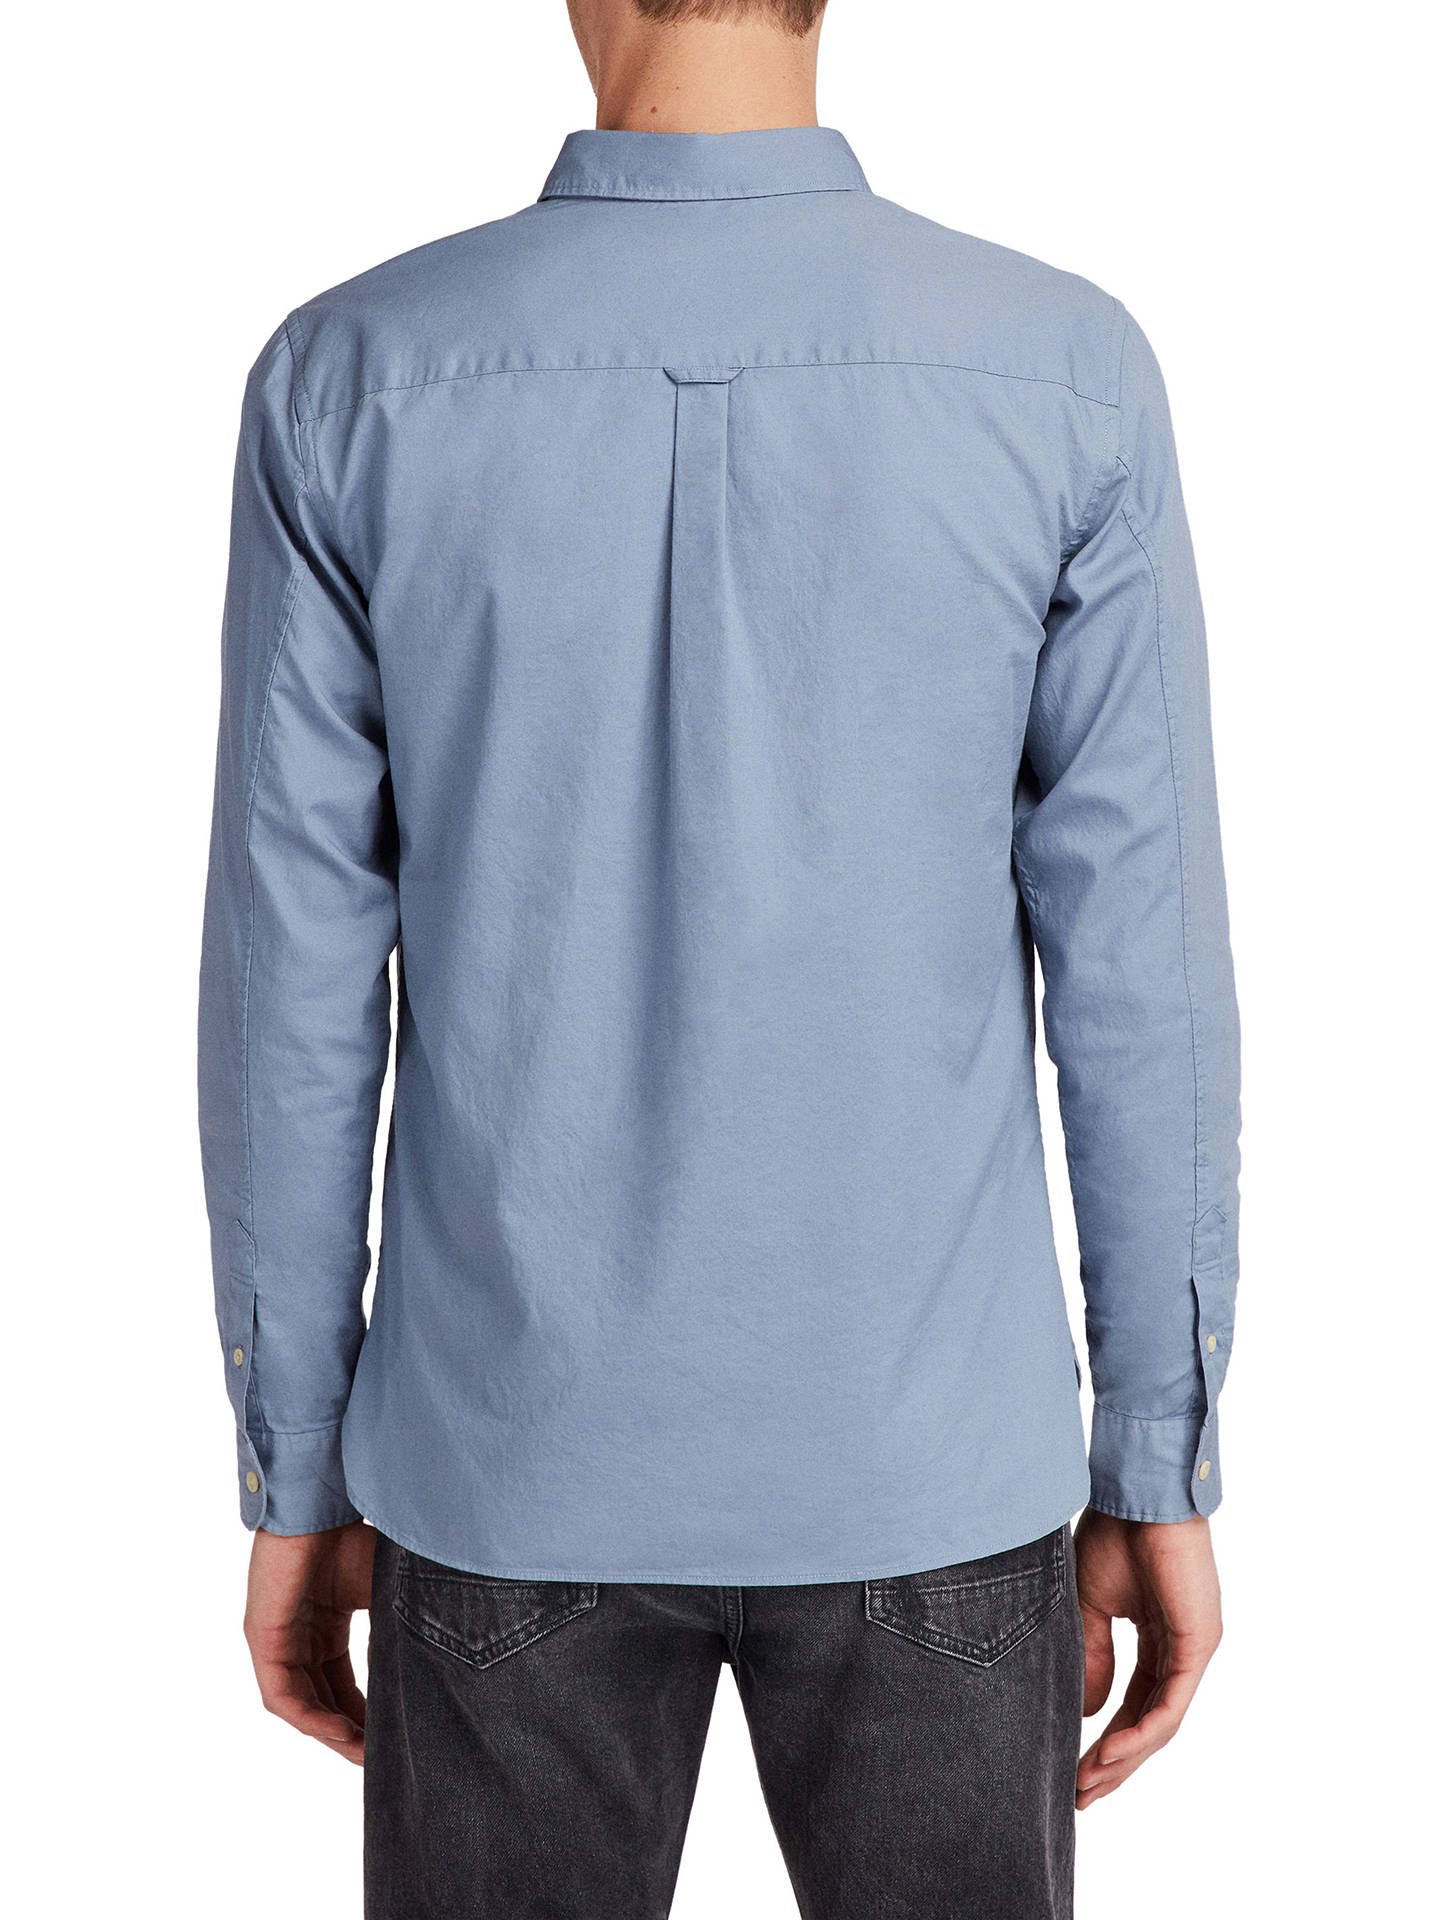 AllSaints Redondo Plain Cotton Shirt, Dove Grey at John Lewis & Partners